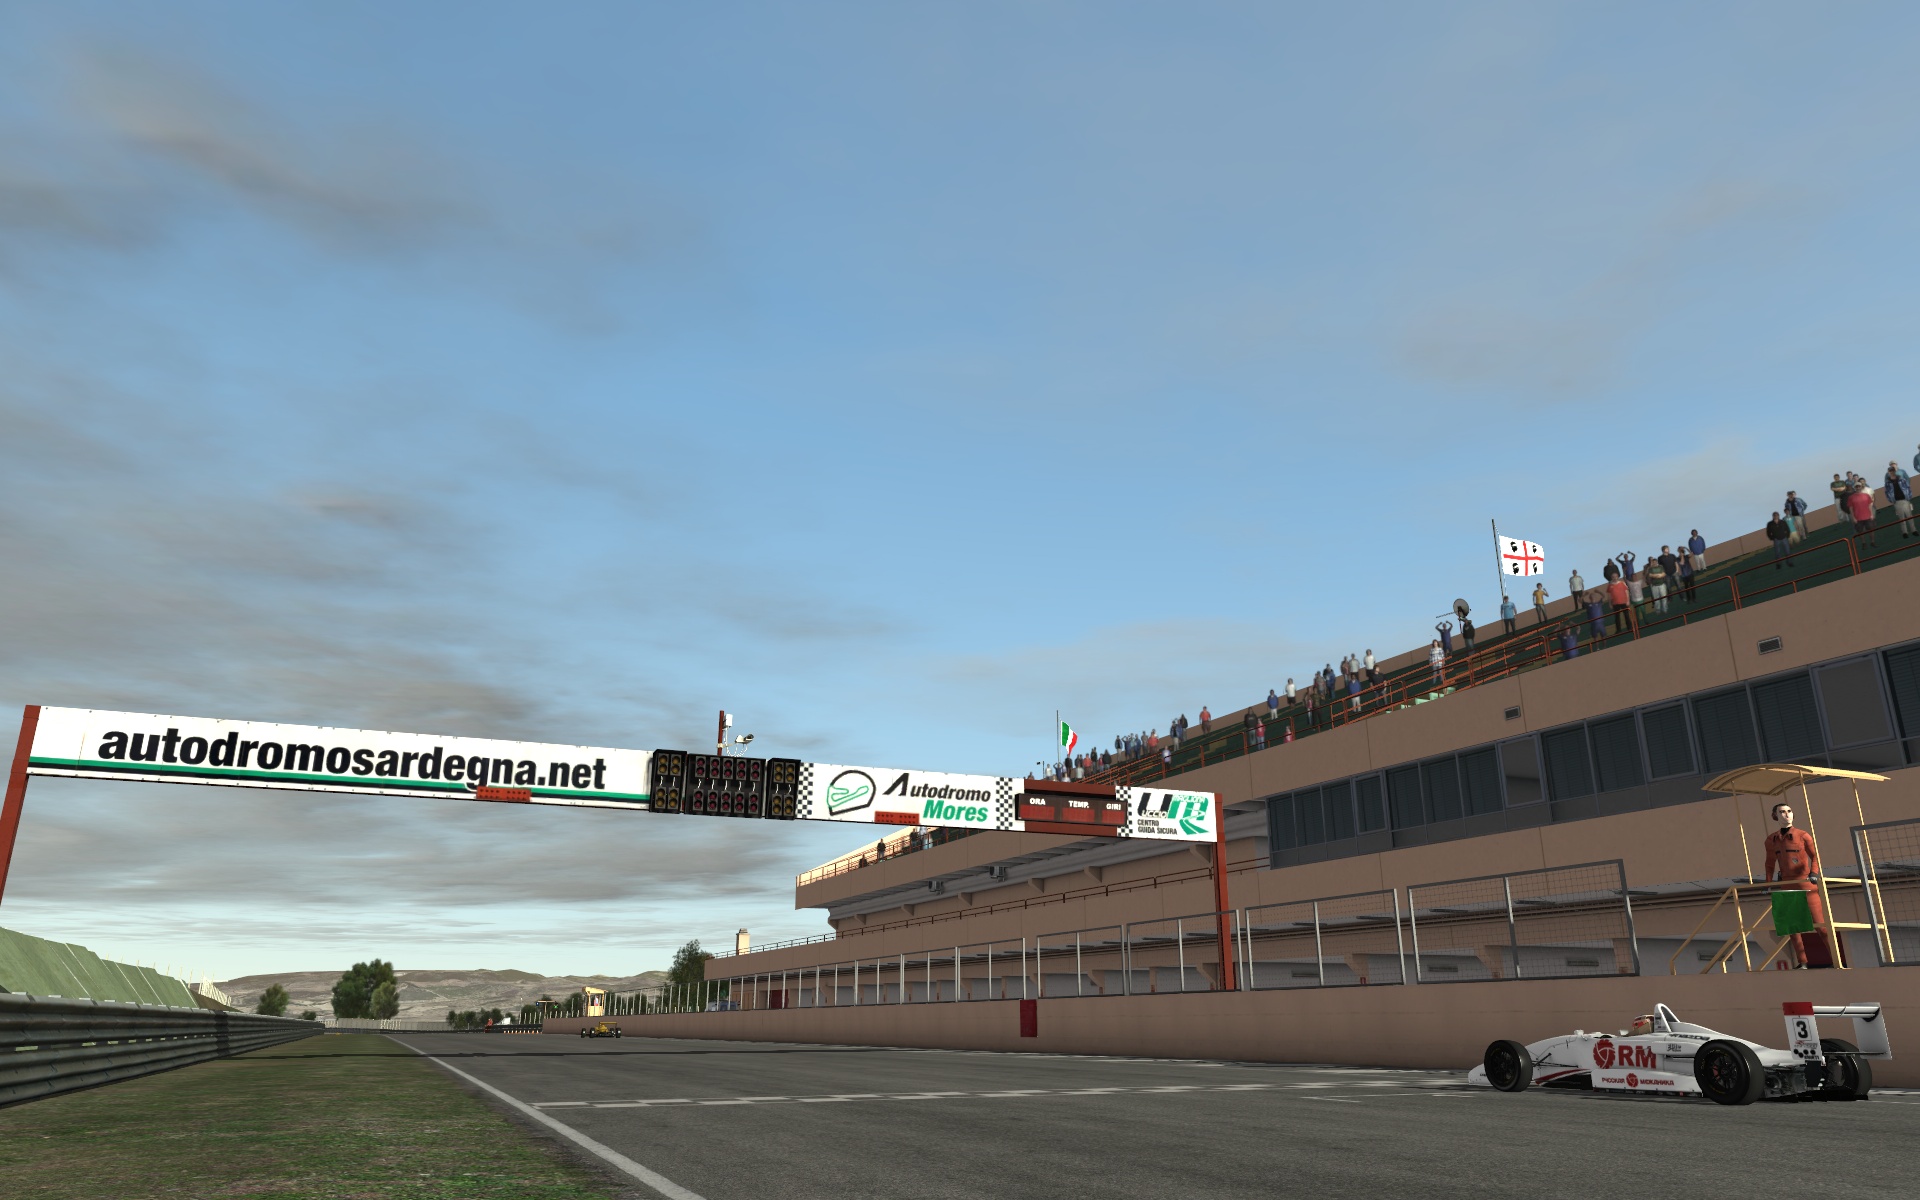 Autodromo di Mores v1.6 Update.jpg